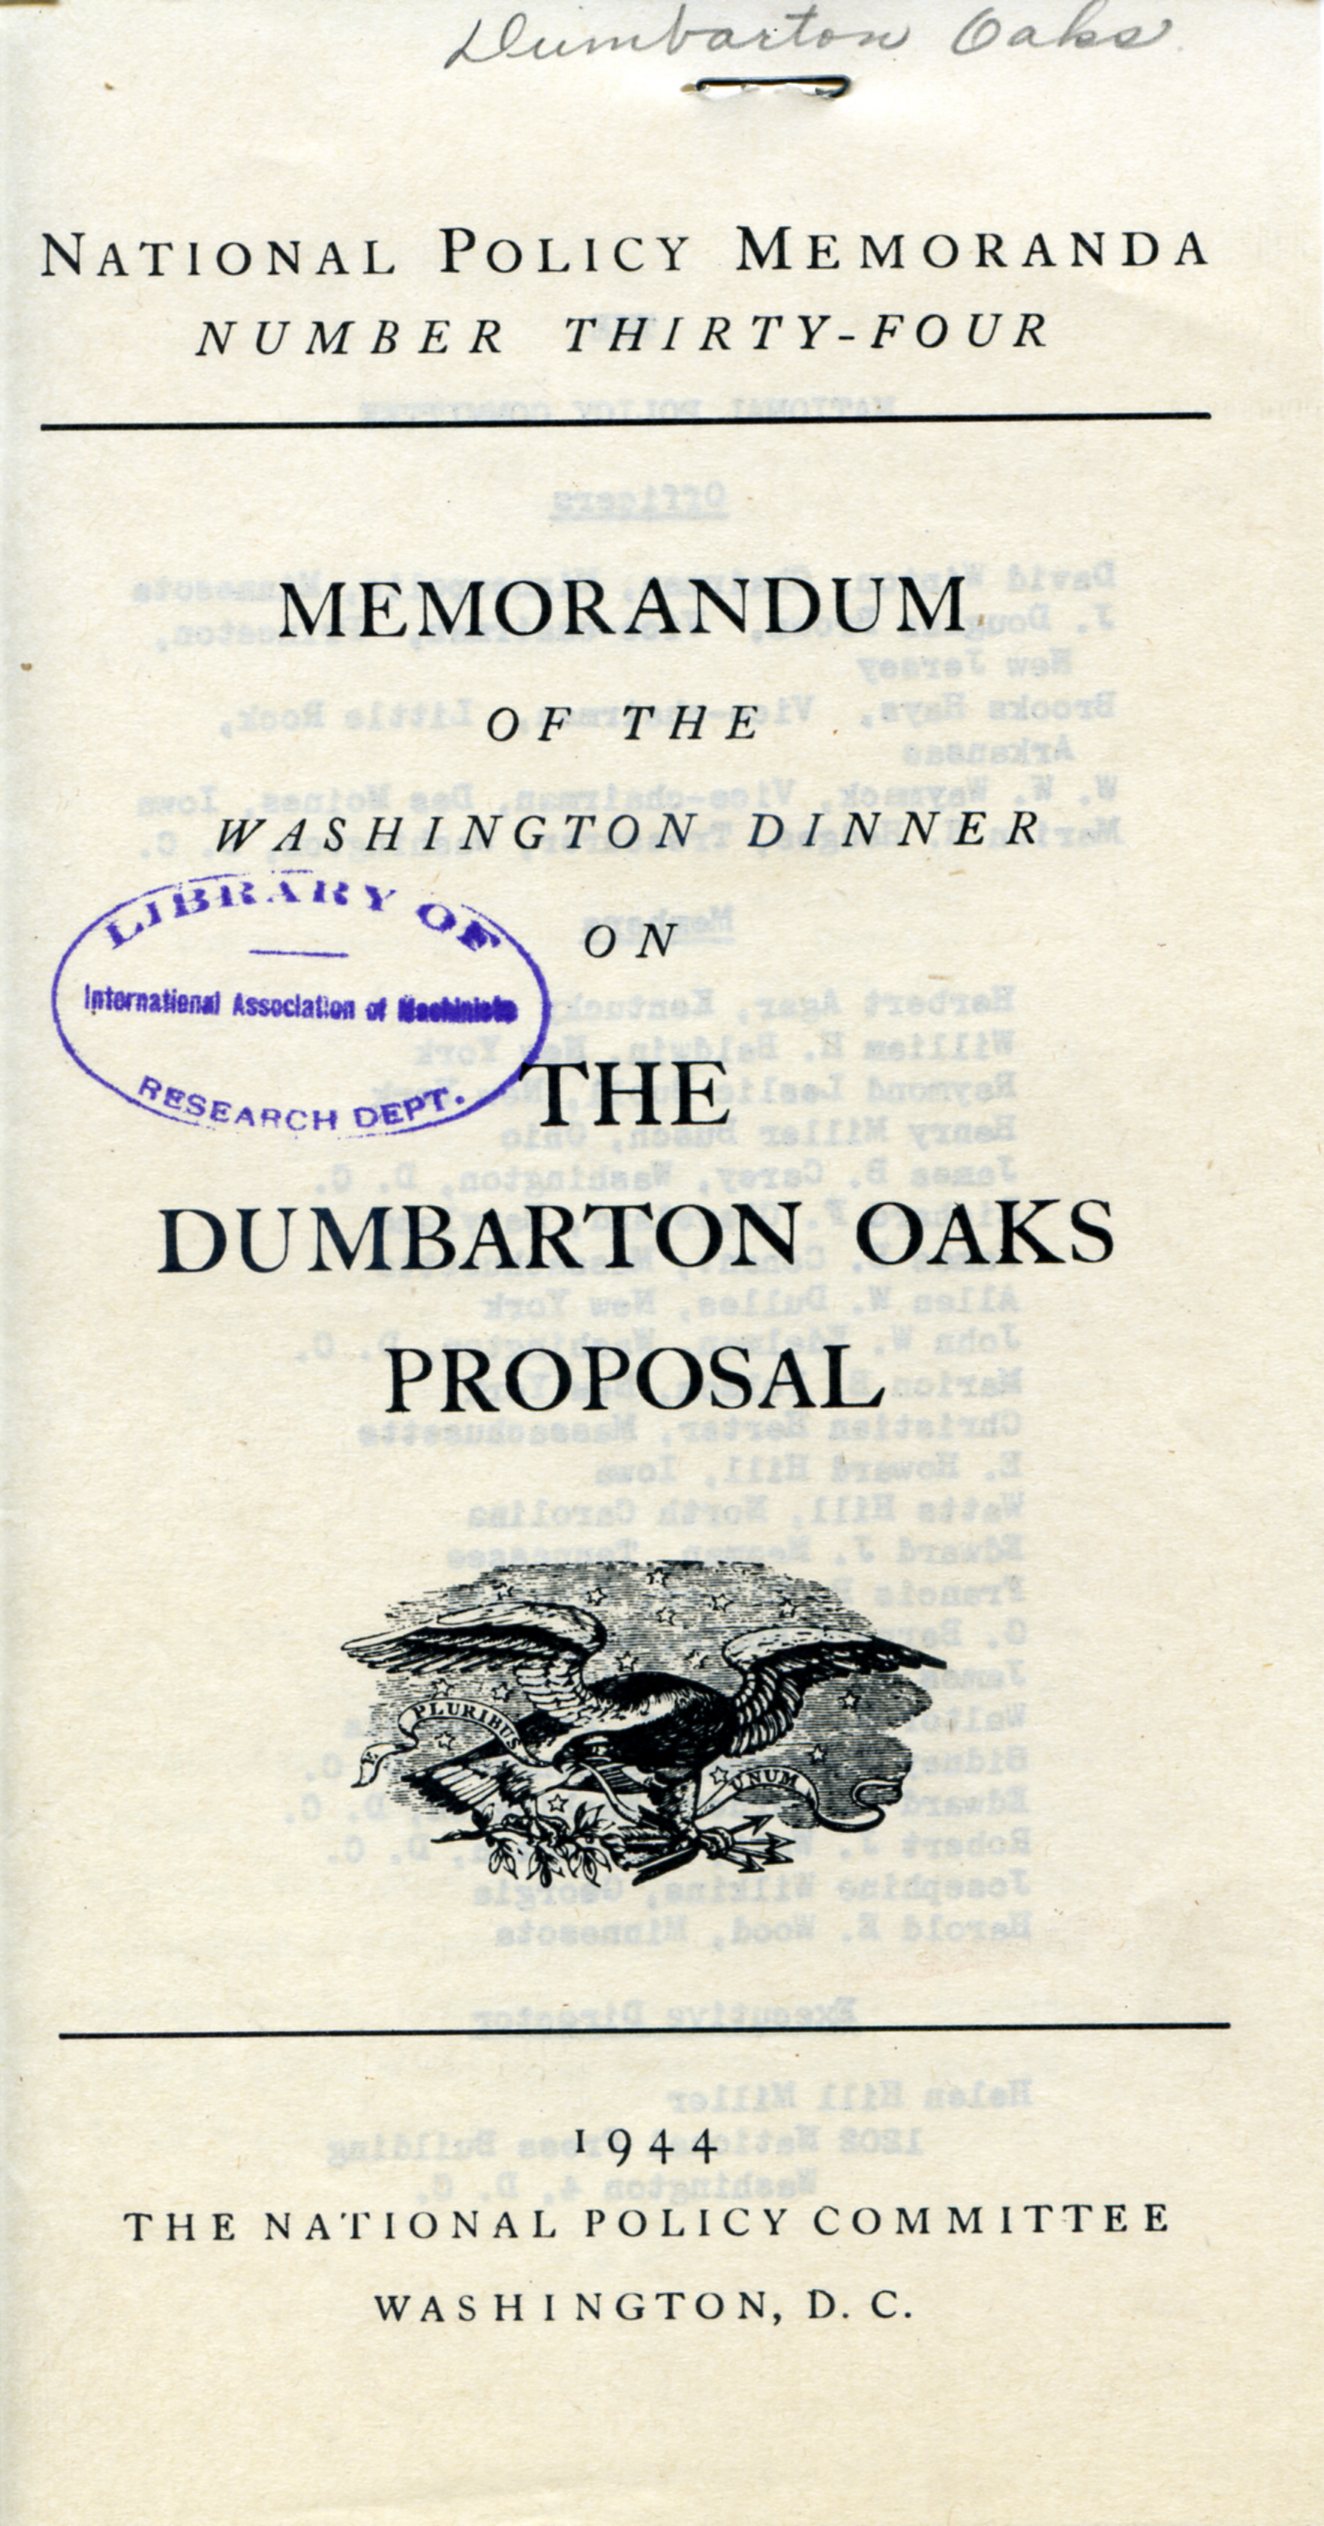 Memorandum of the Washington Dinner on The Dumbarton Oaks Proposal